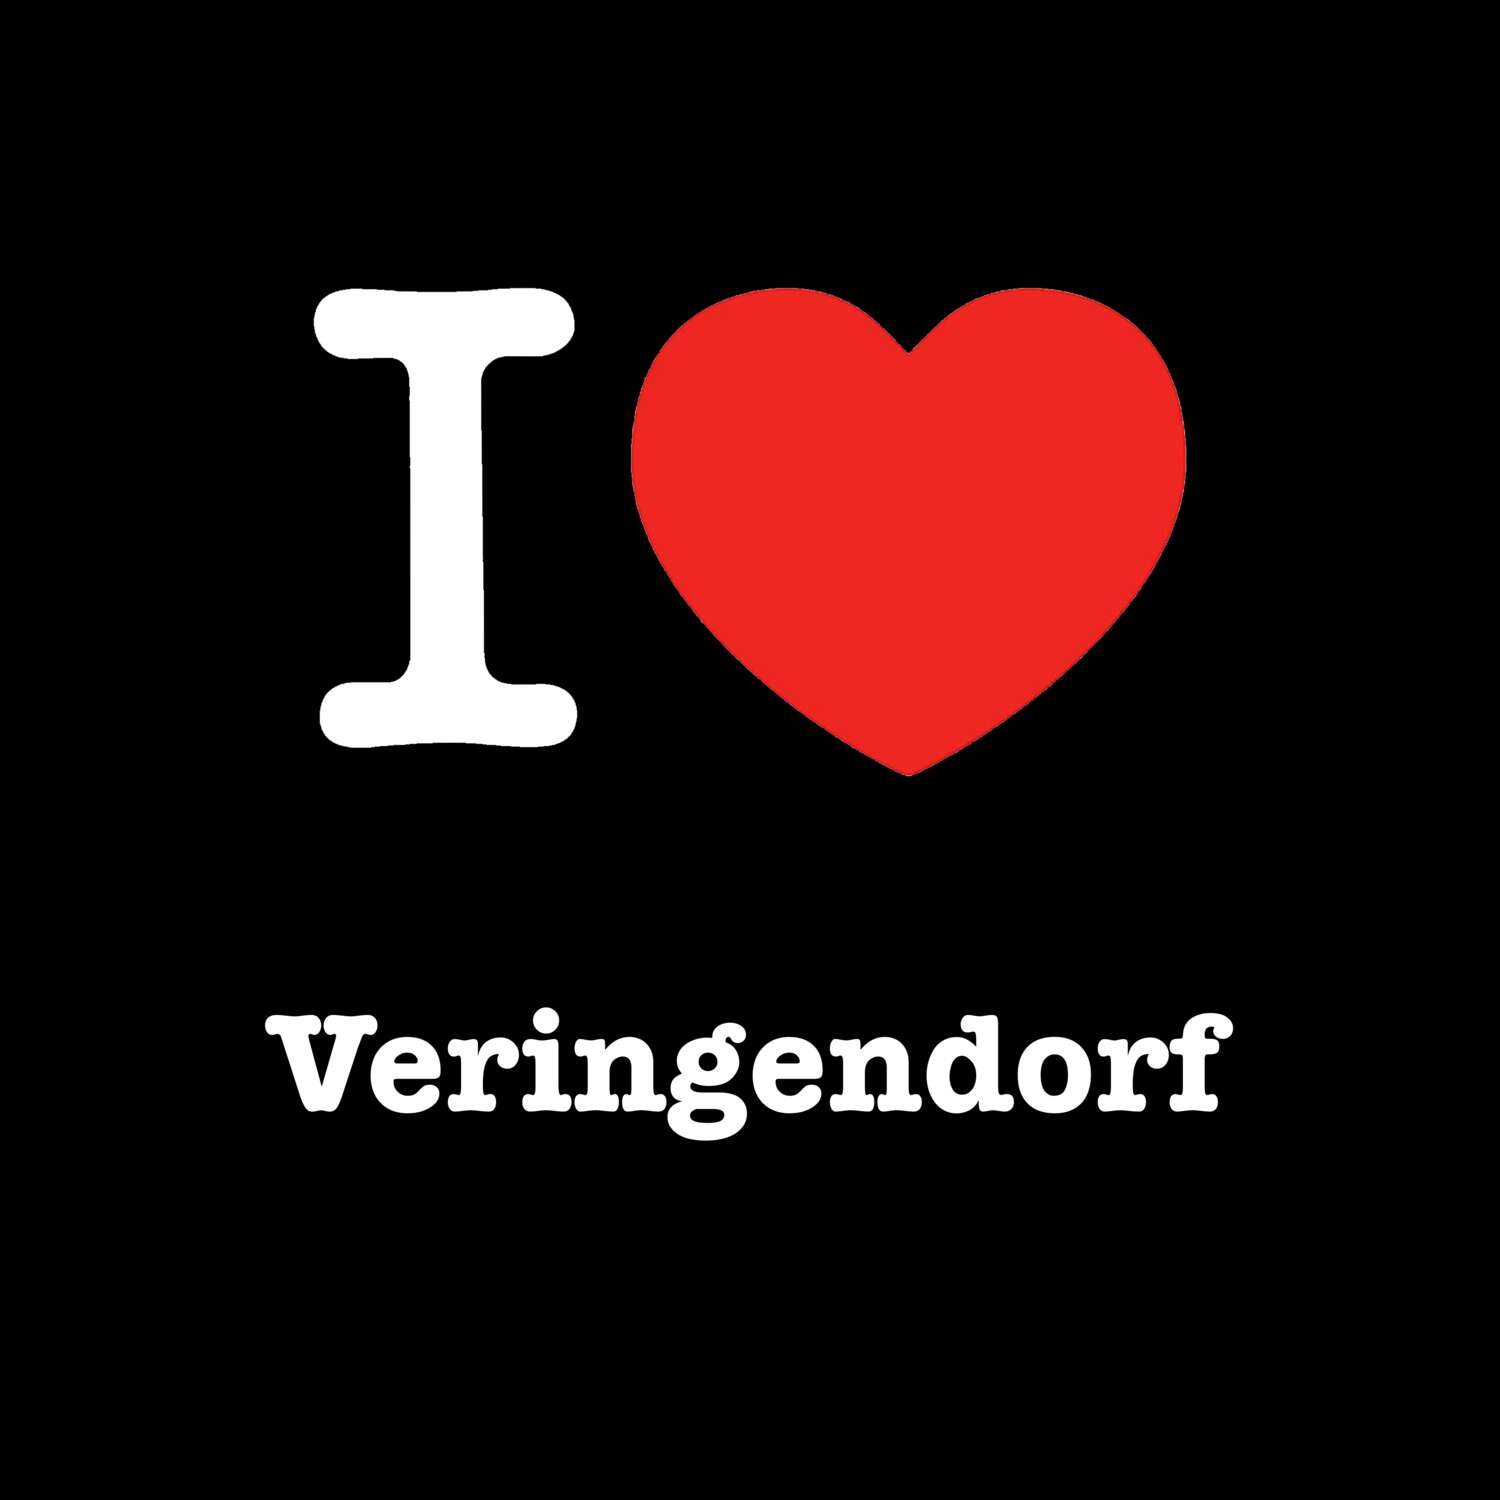 Veringendorf T-Shirt »I love«